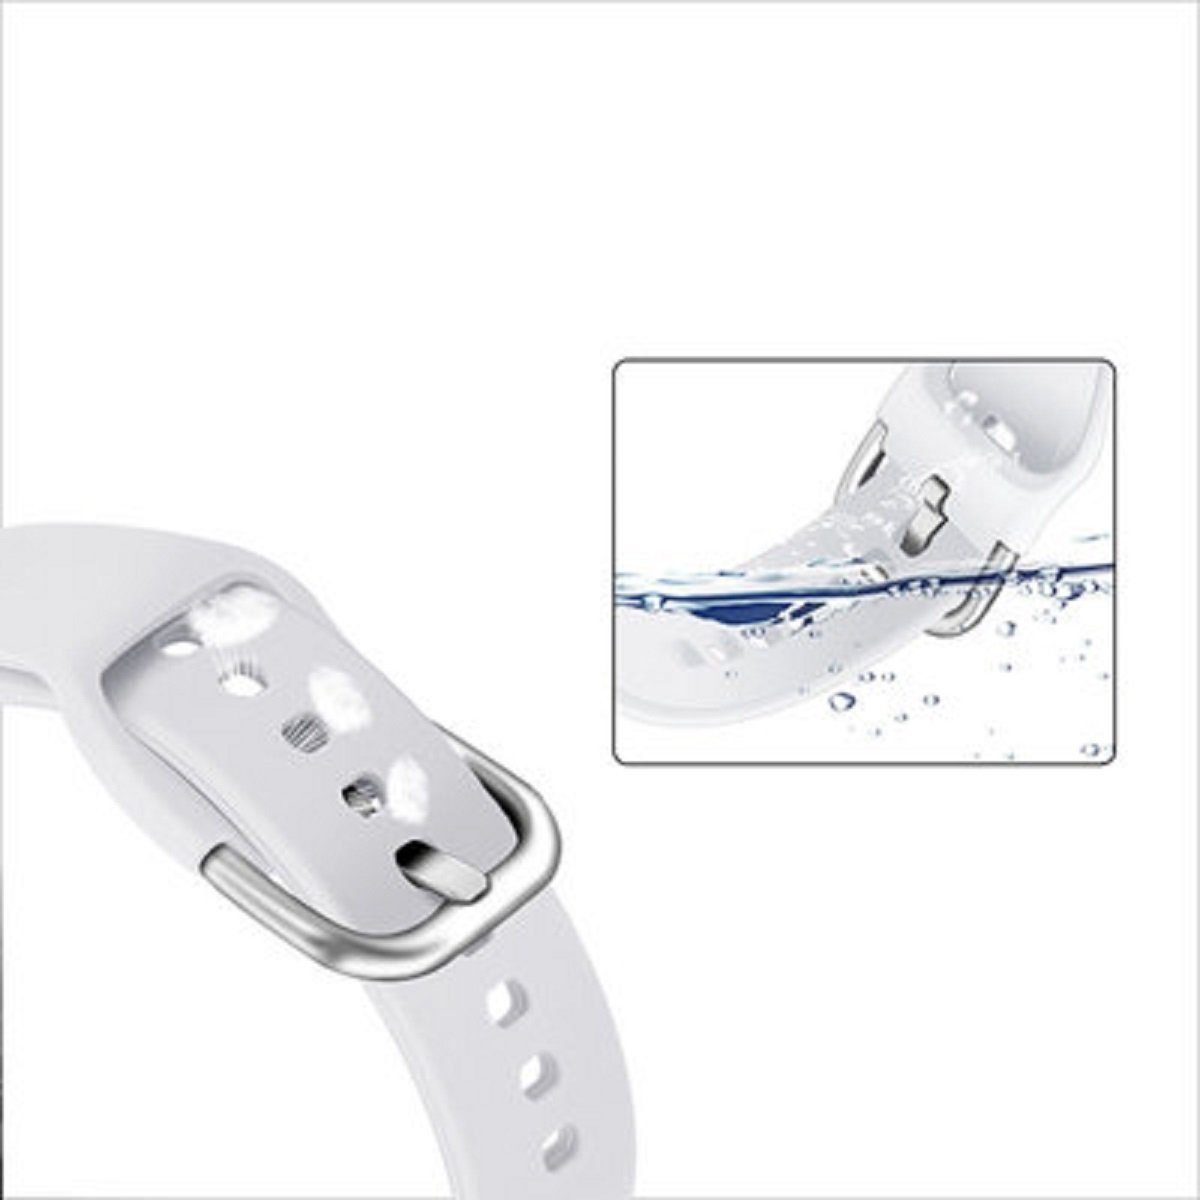 Silikonarmband Grau Hurtel 22mm Smartwatch-Armband Breite Uhrenarmband Ersatz universal